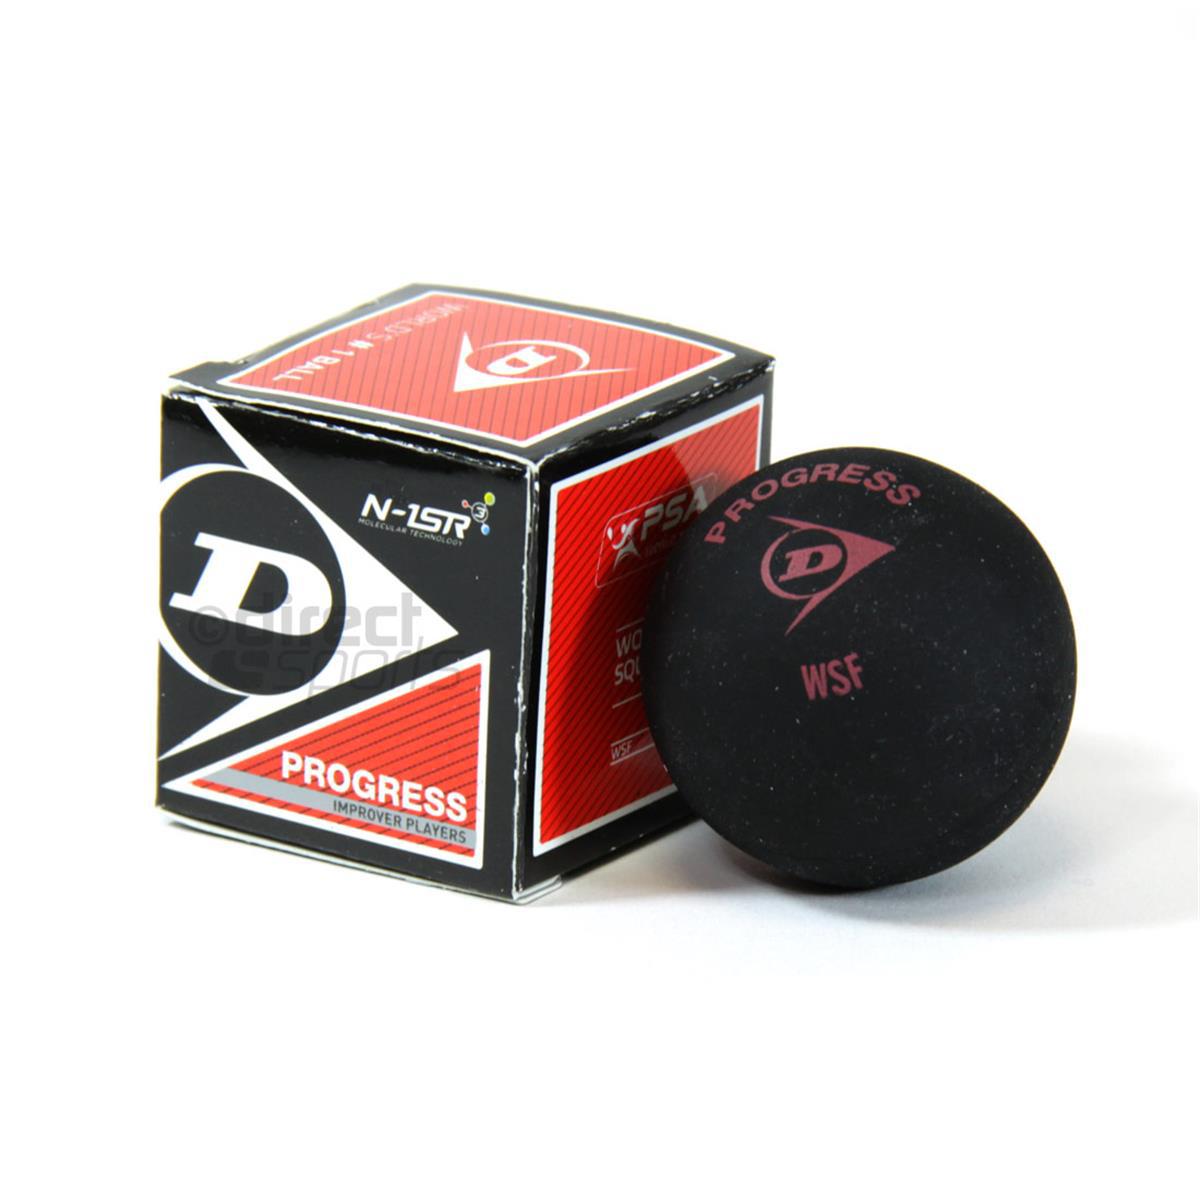 Dunlop Progress (Red Dot) Squash Ball-Bruntsfield Sports Online